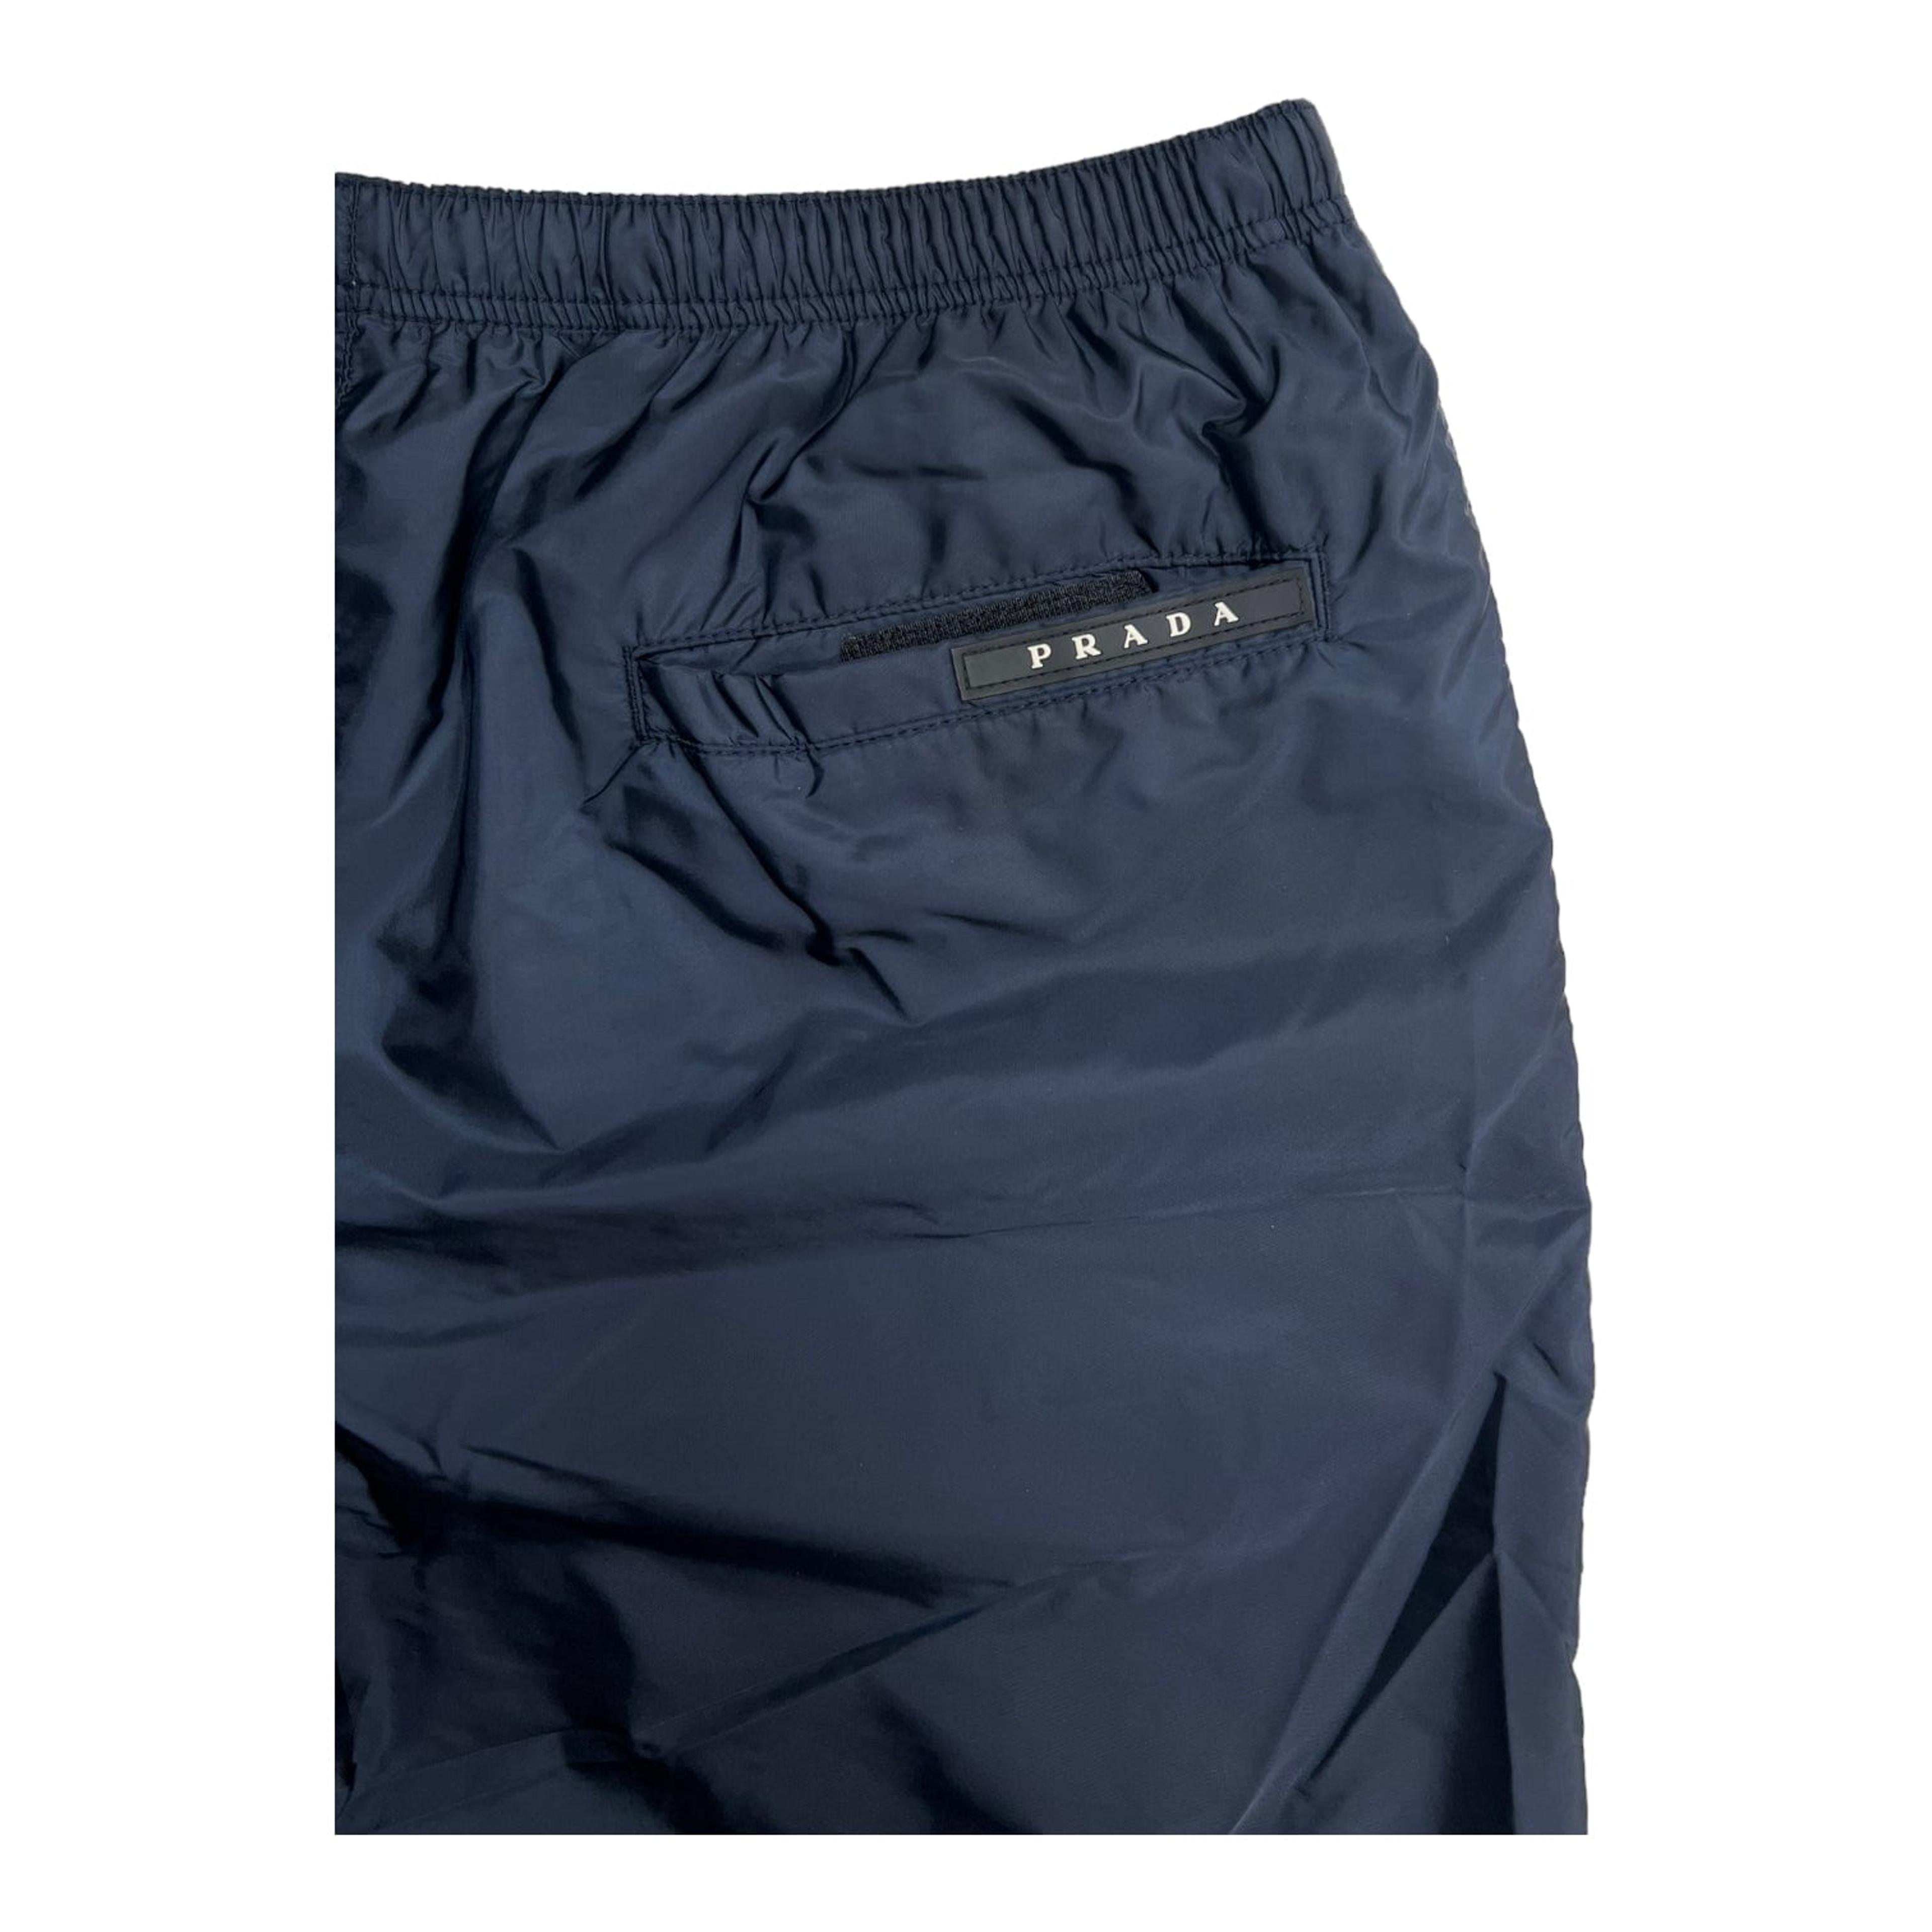 Alternate View 2 of Prada Striped Poplin Cotton Shorts Blue Pre-Owned